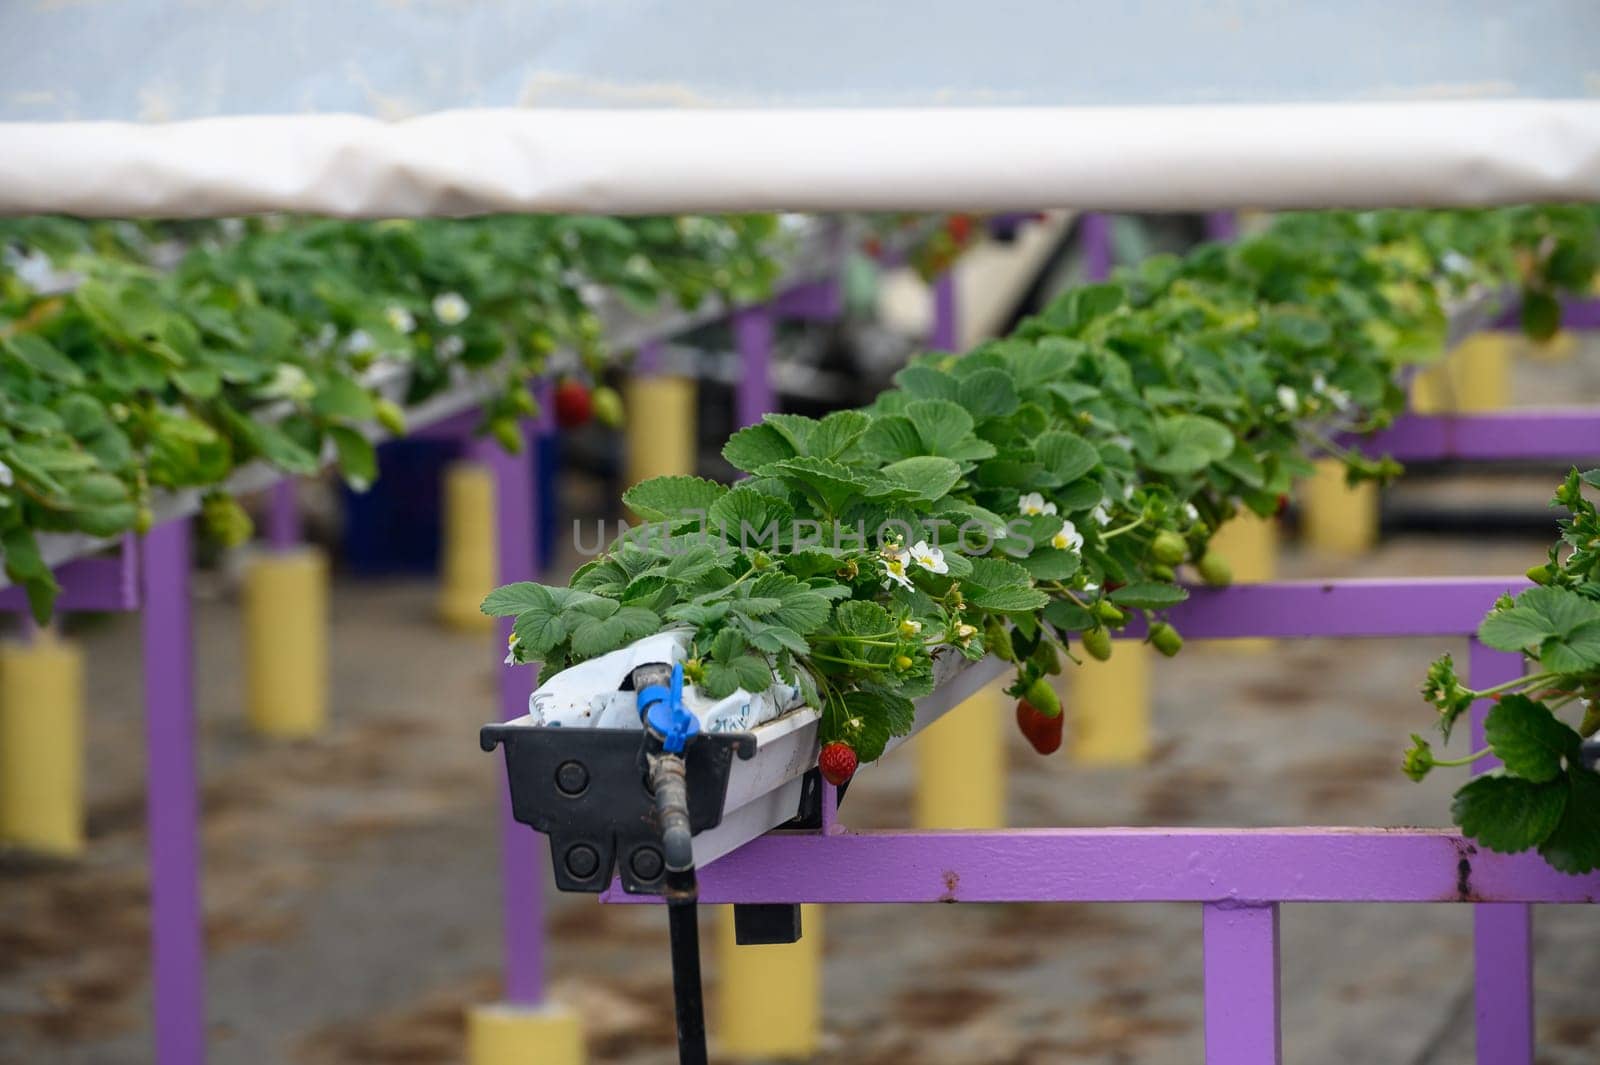 juicy strawberries ripen in a greenhouse in winter in Cyprus 5 by Mixa74